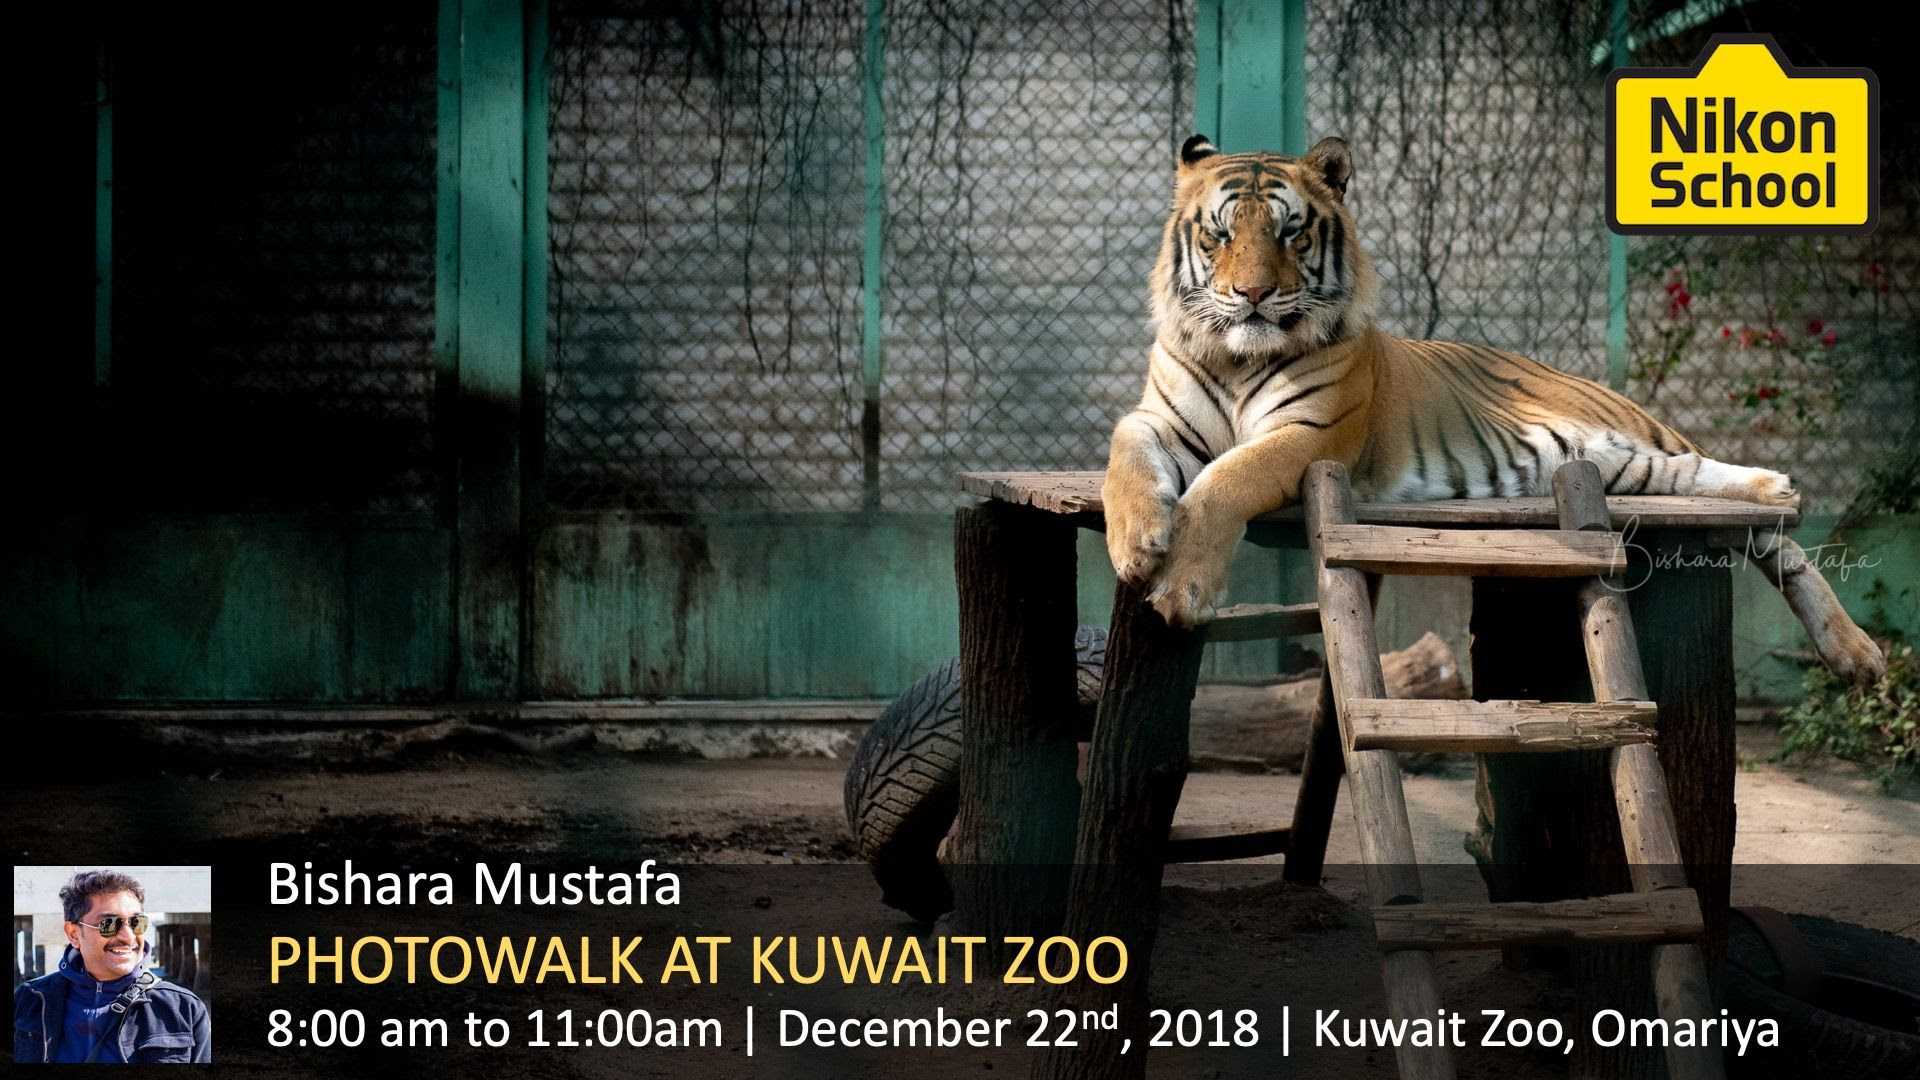 Nikon School Kuwait Zoo Photowalk Poster